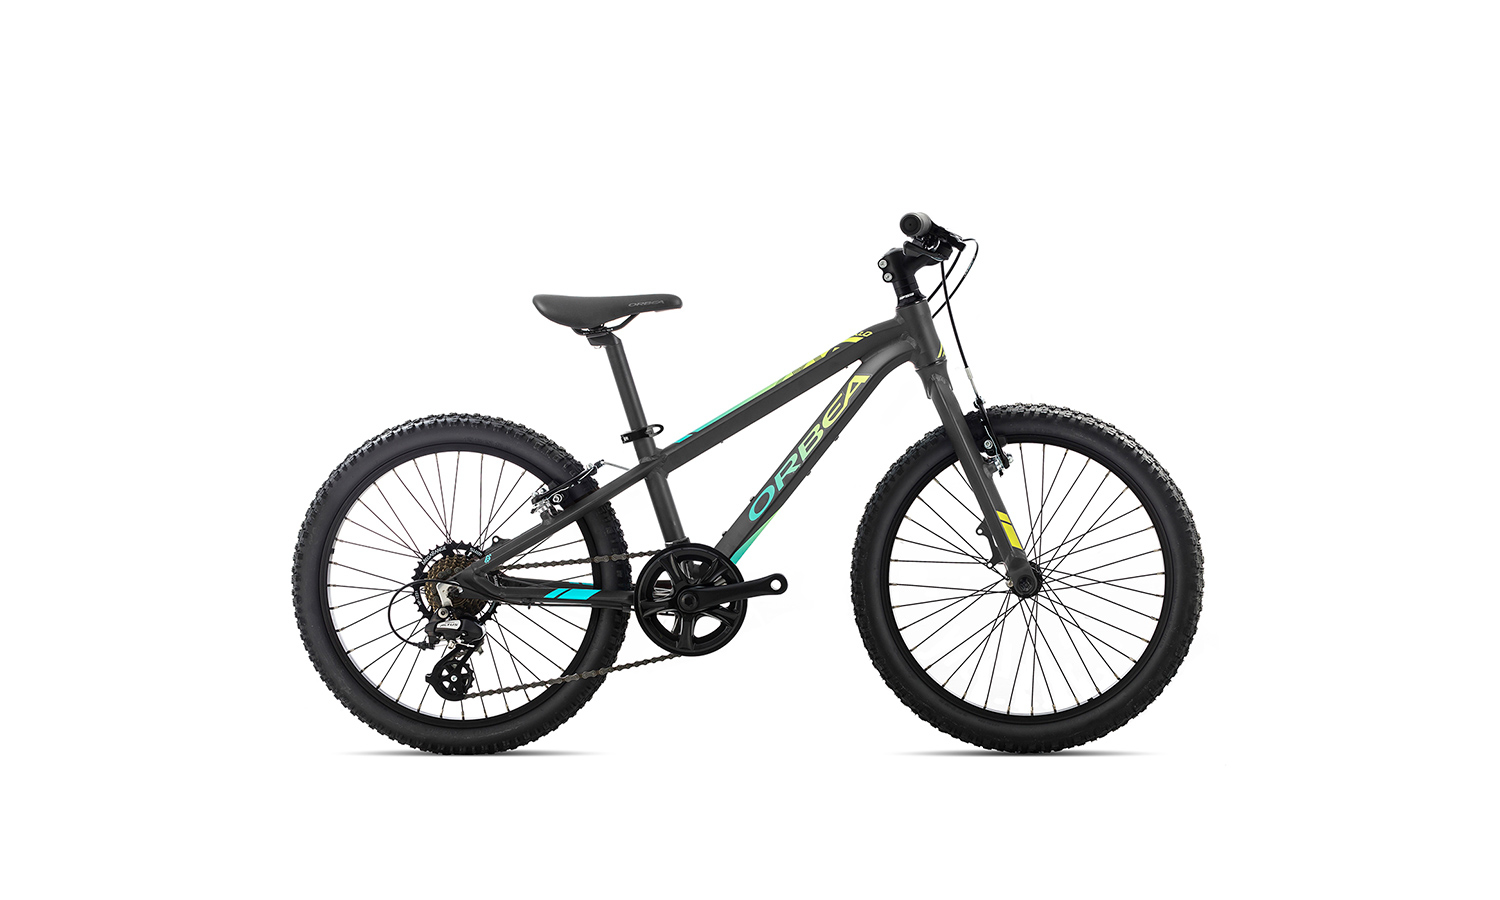 Велосипед Orbea MX 20 DIRT (2019)